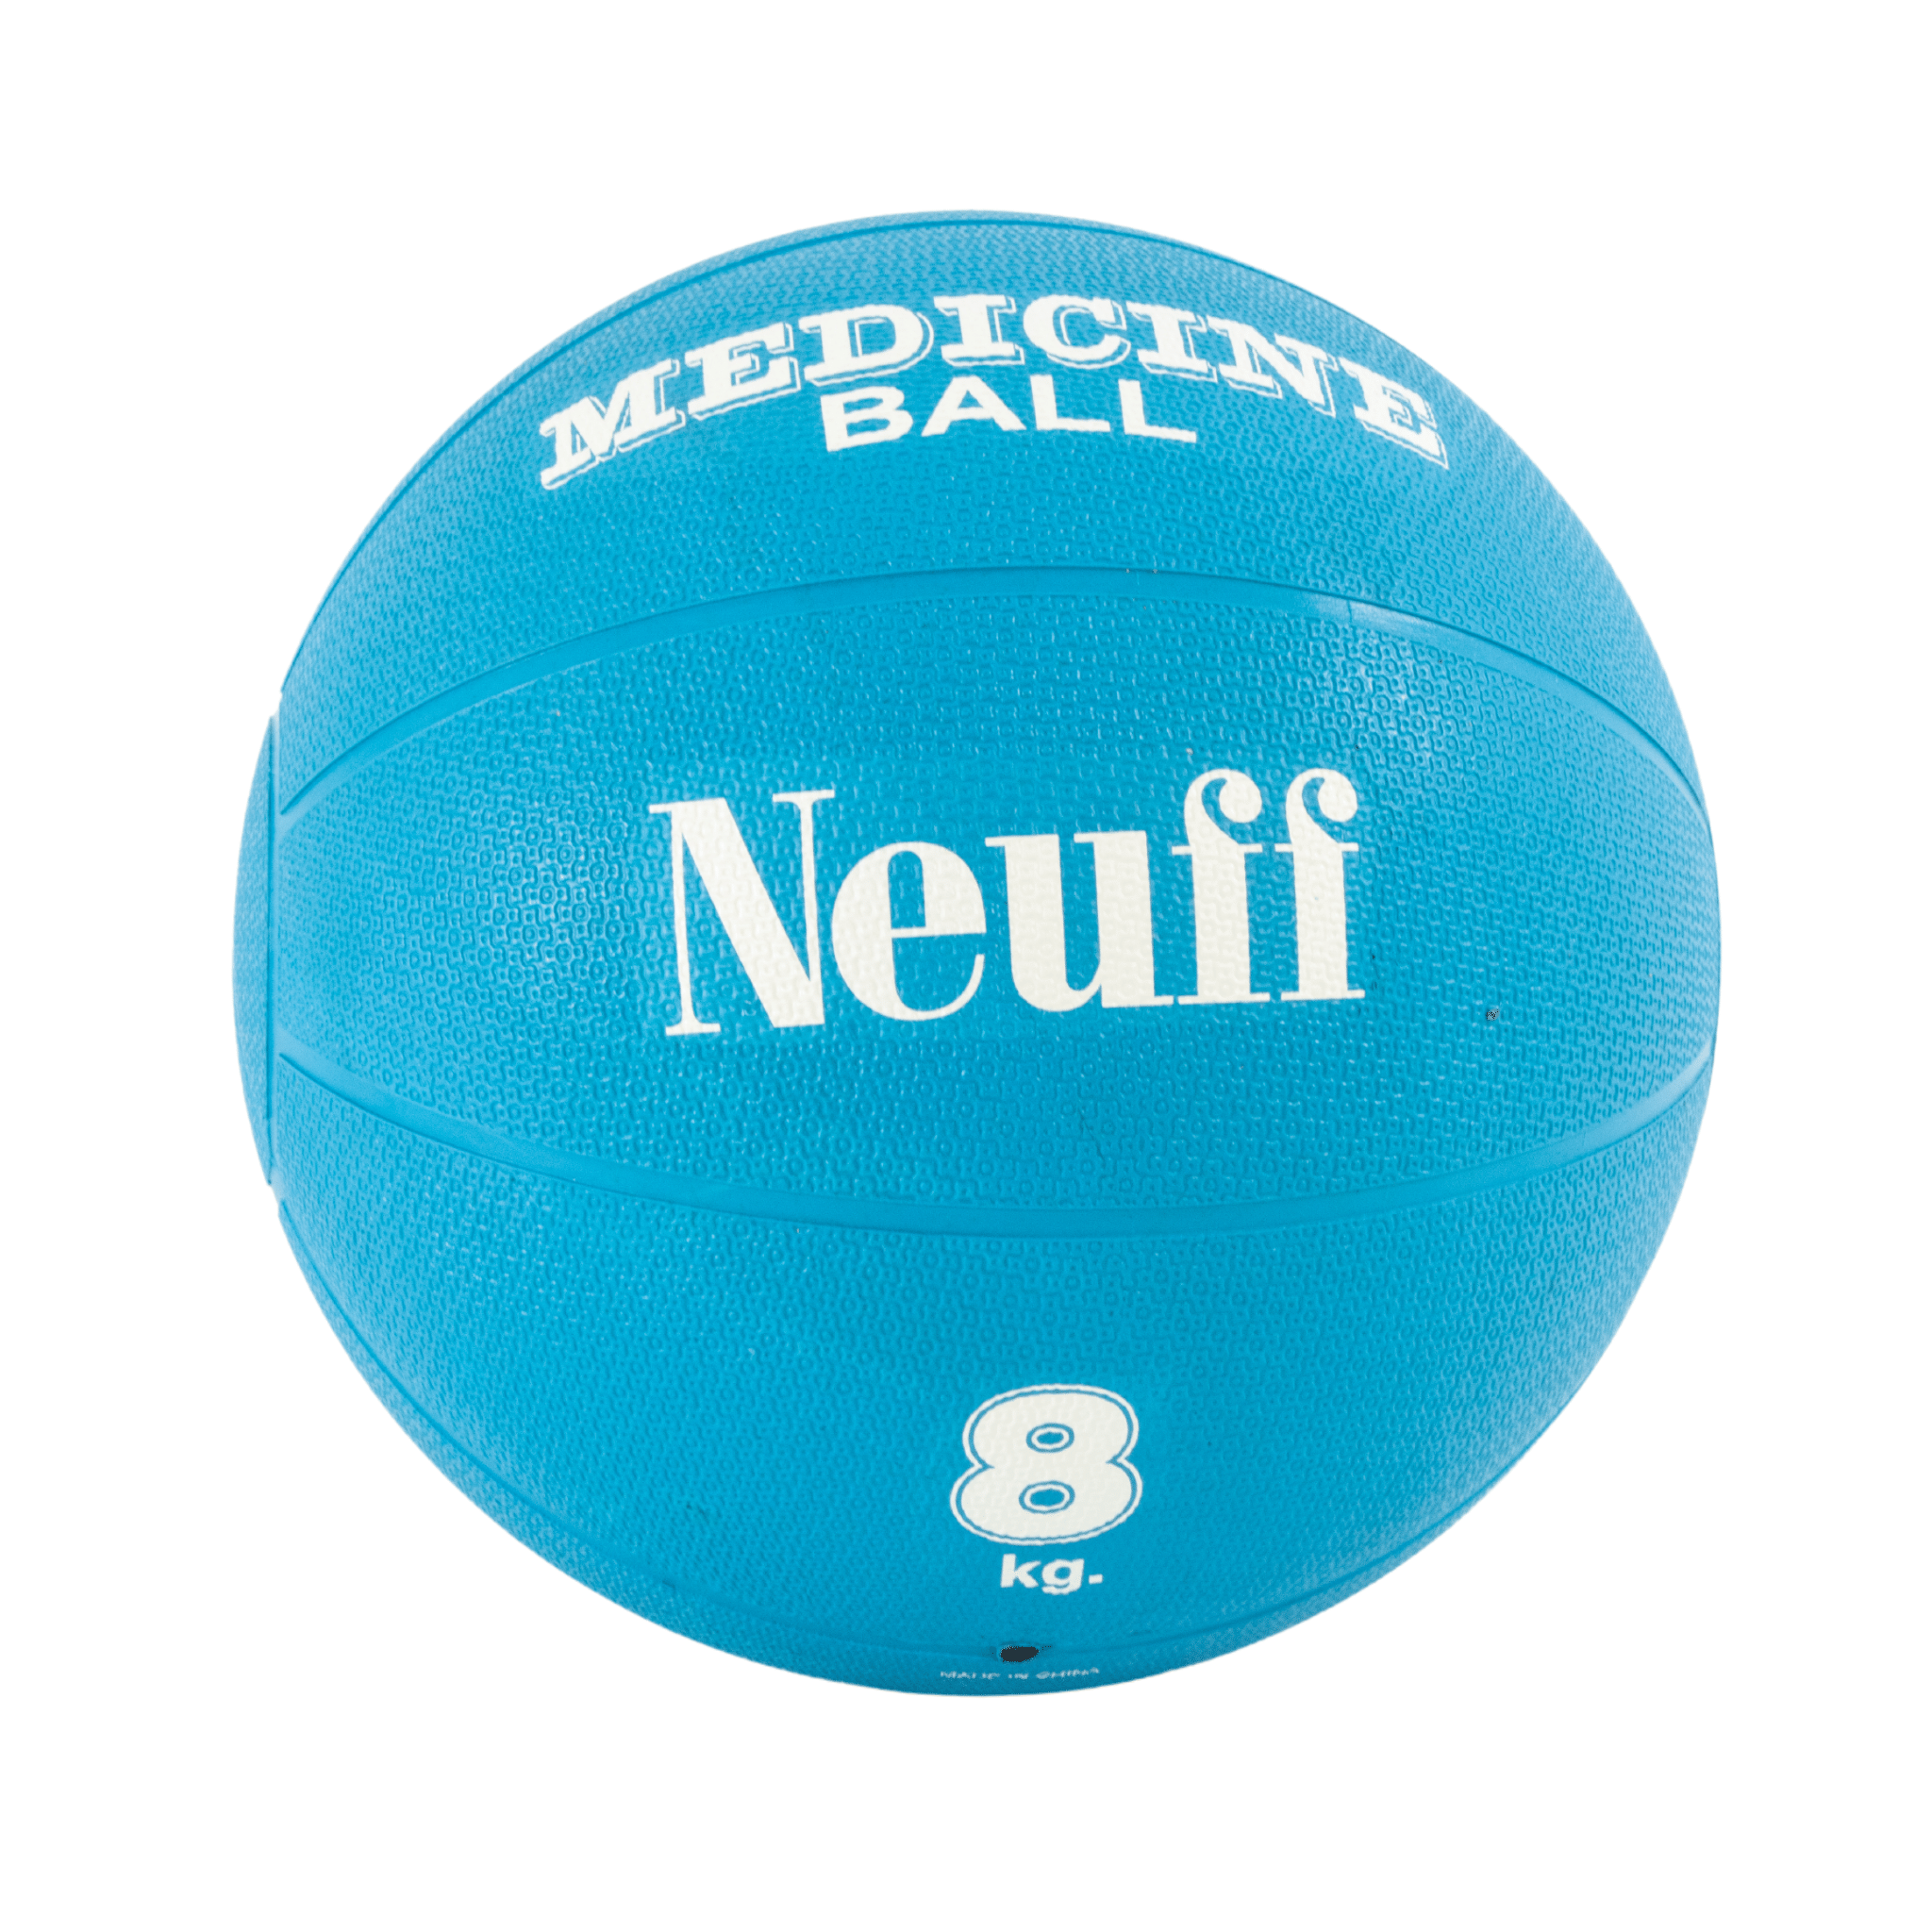 Neuff Medicine Ball | 8 kg | Blue with white logo